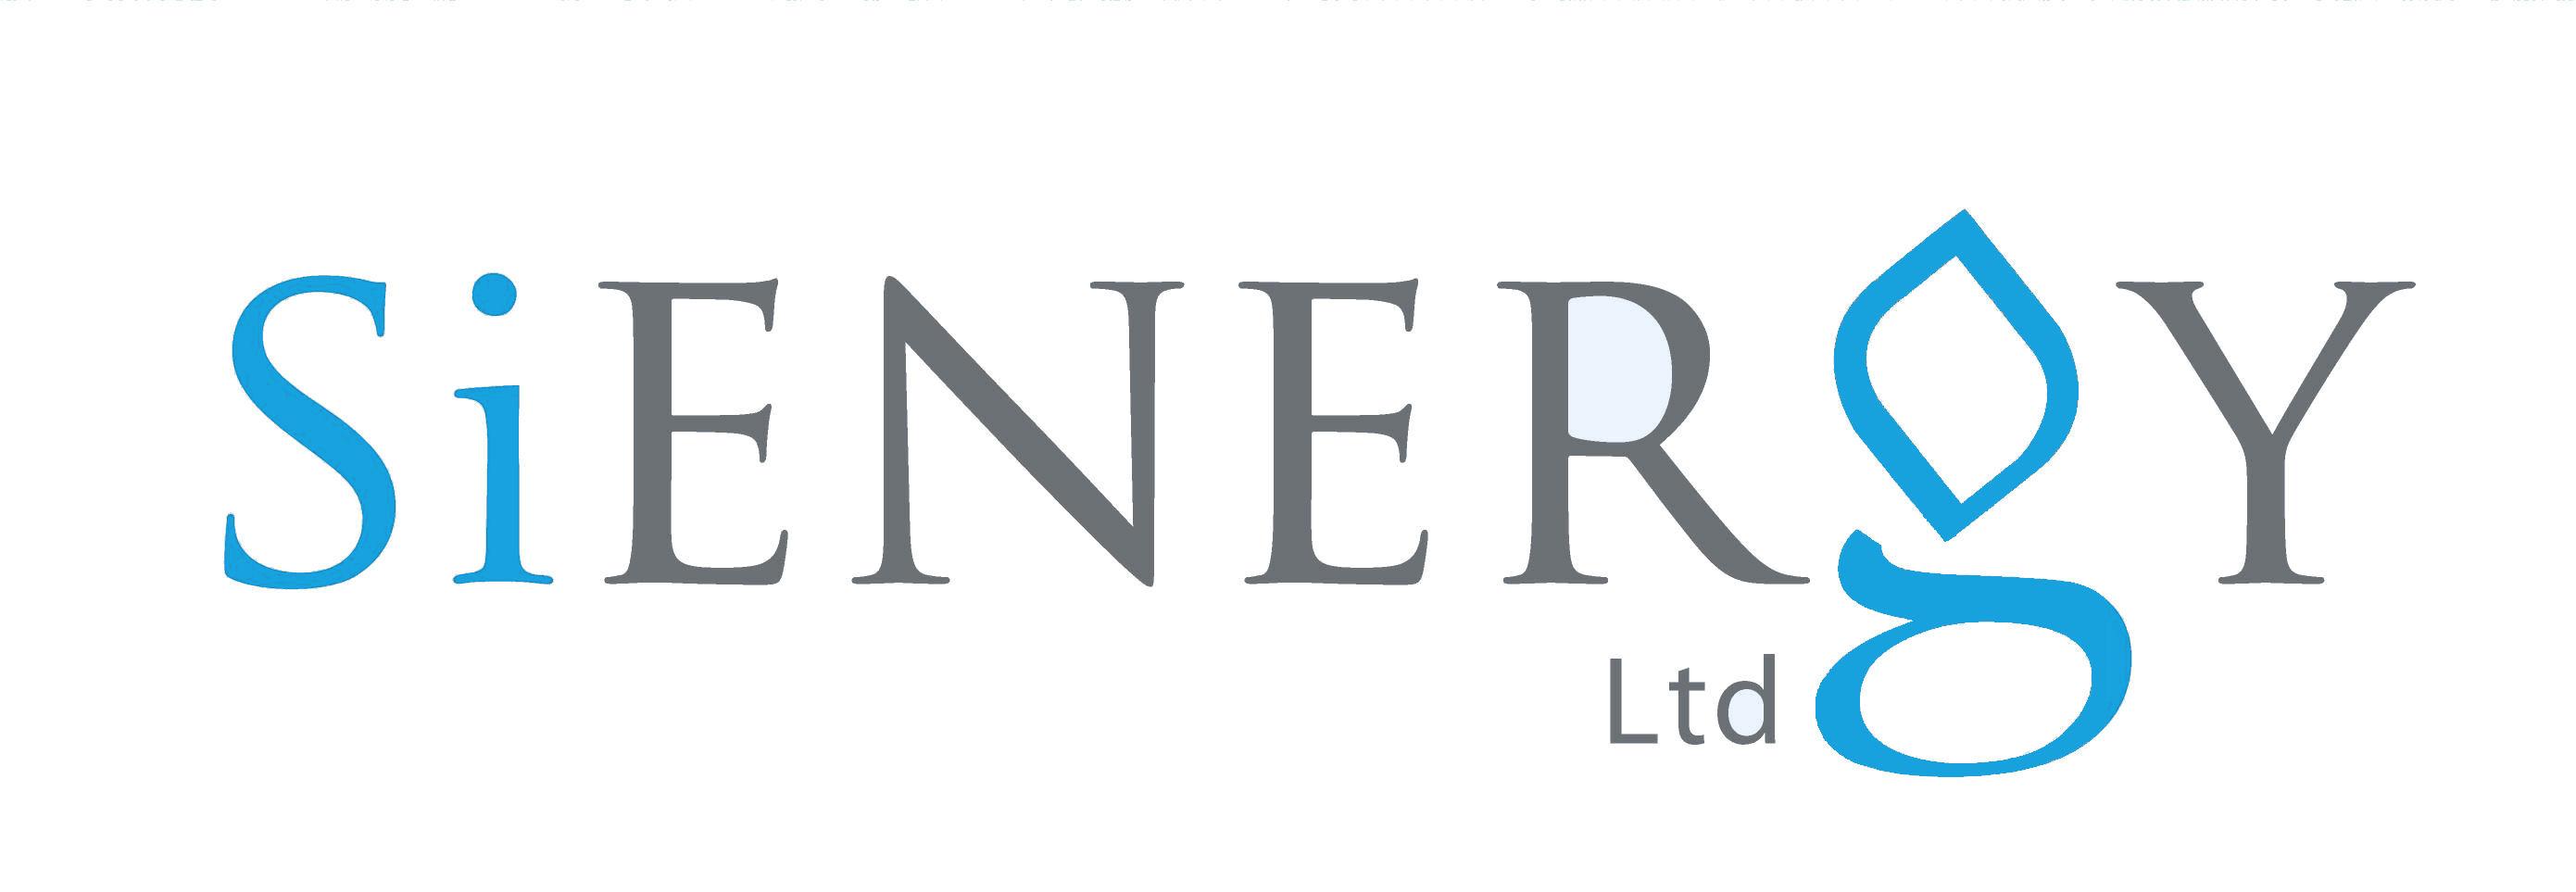 SiEnergy Company Logo - Wind Turbines